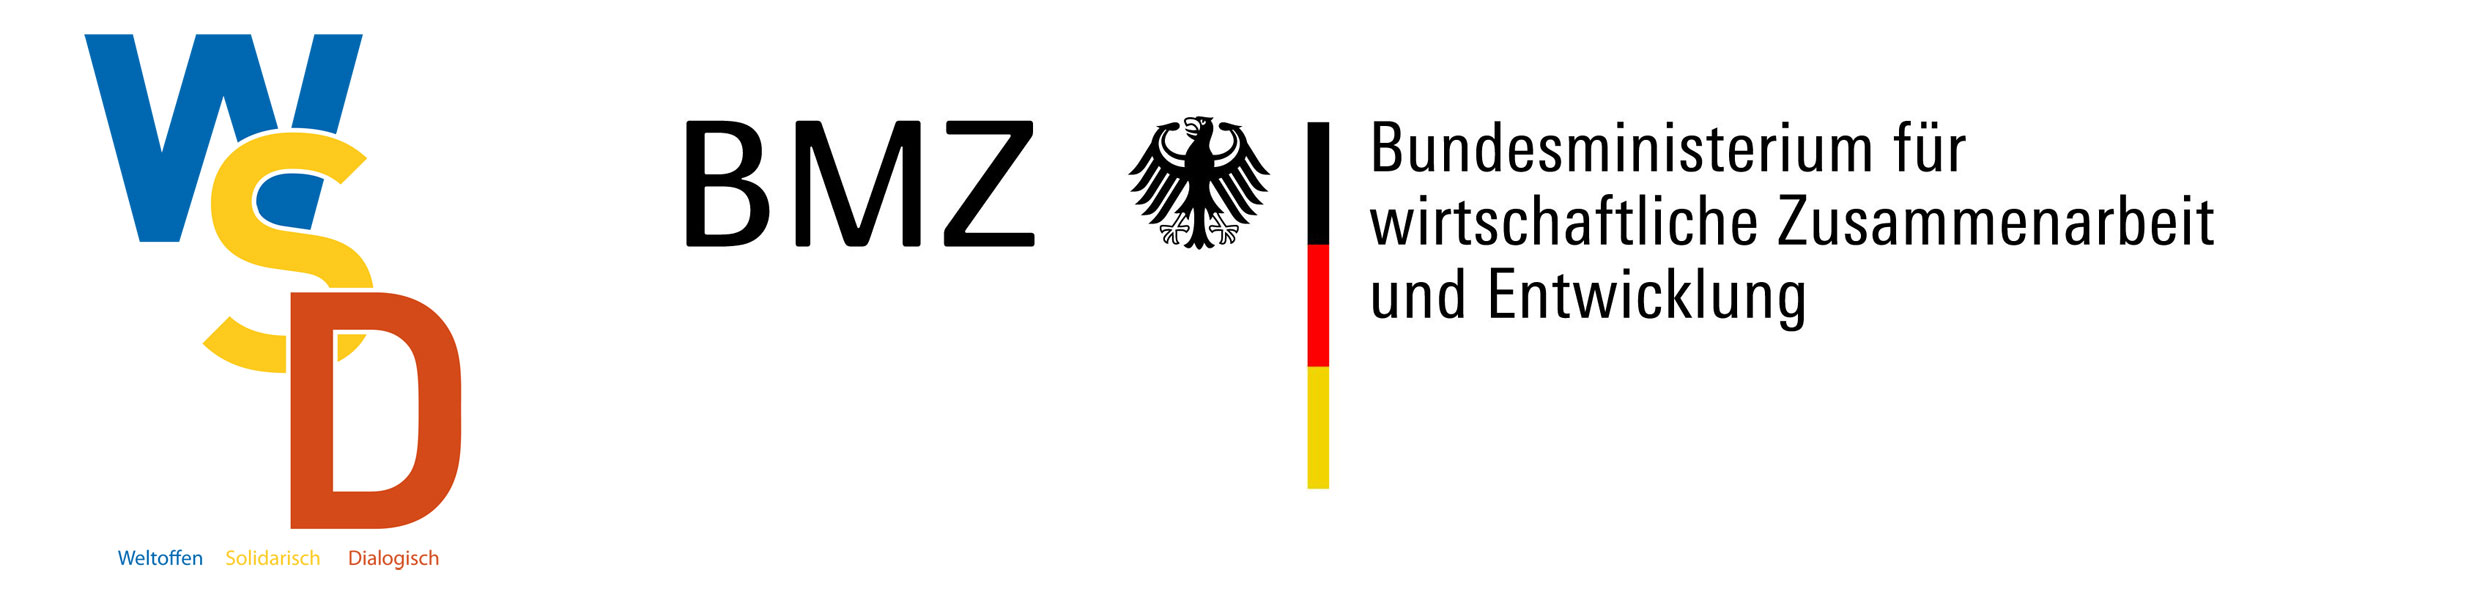 BMZ_WSD_Logos